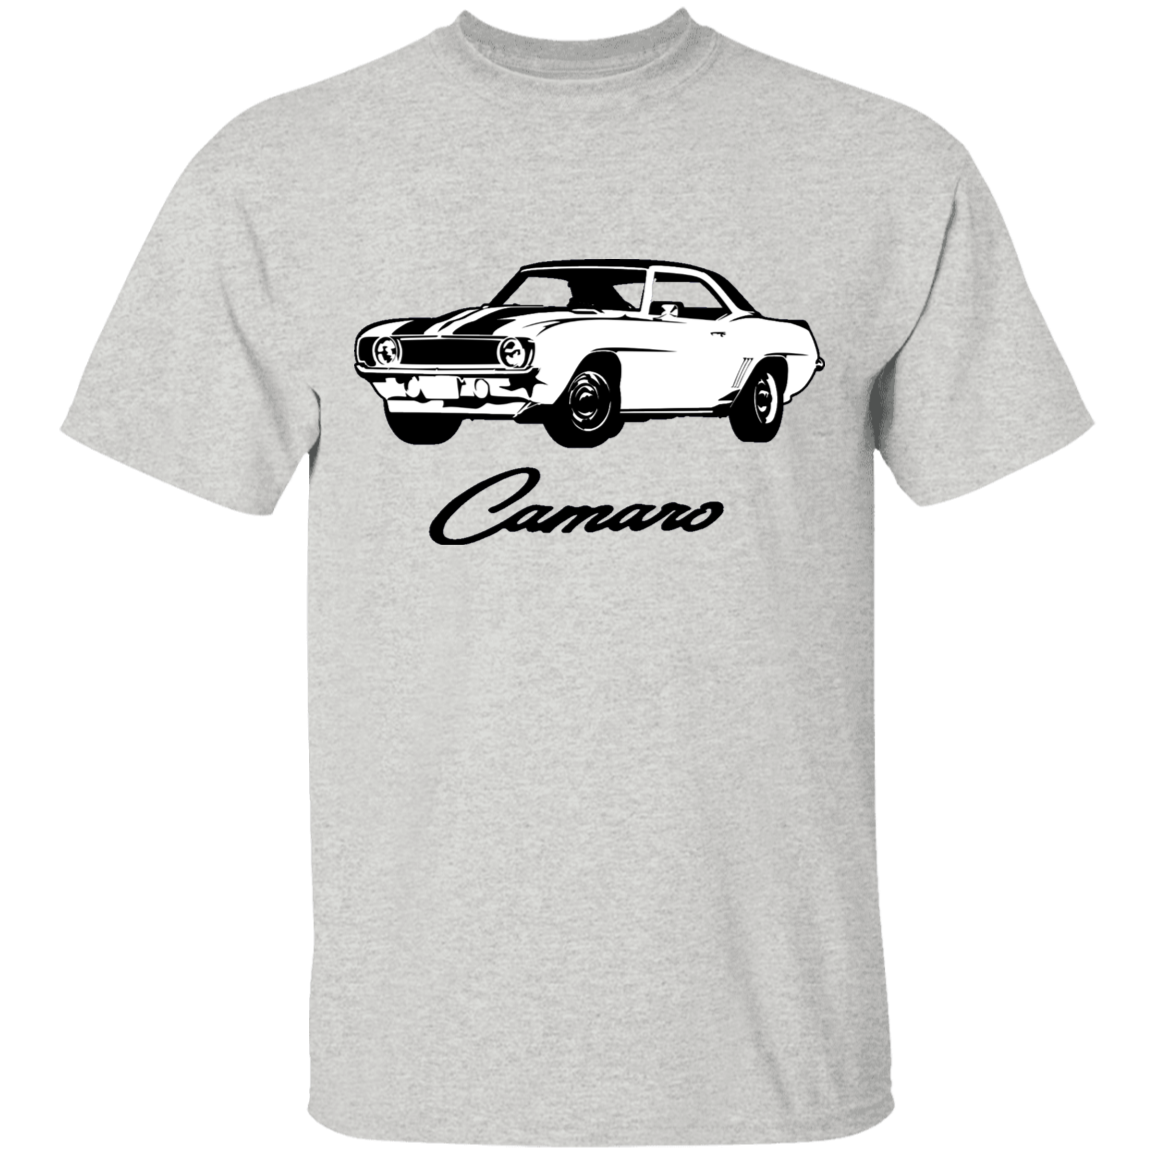 '69 Camero t'shirt